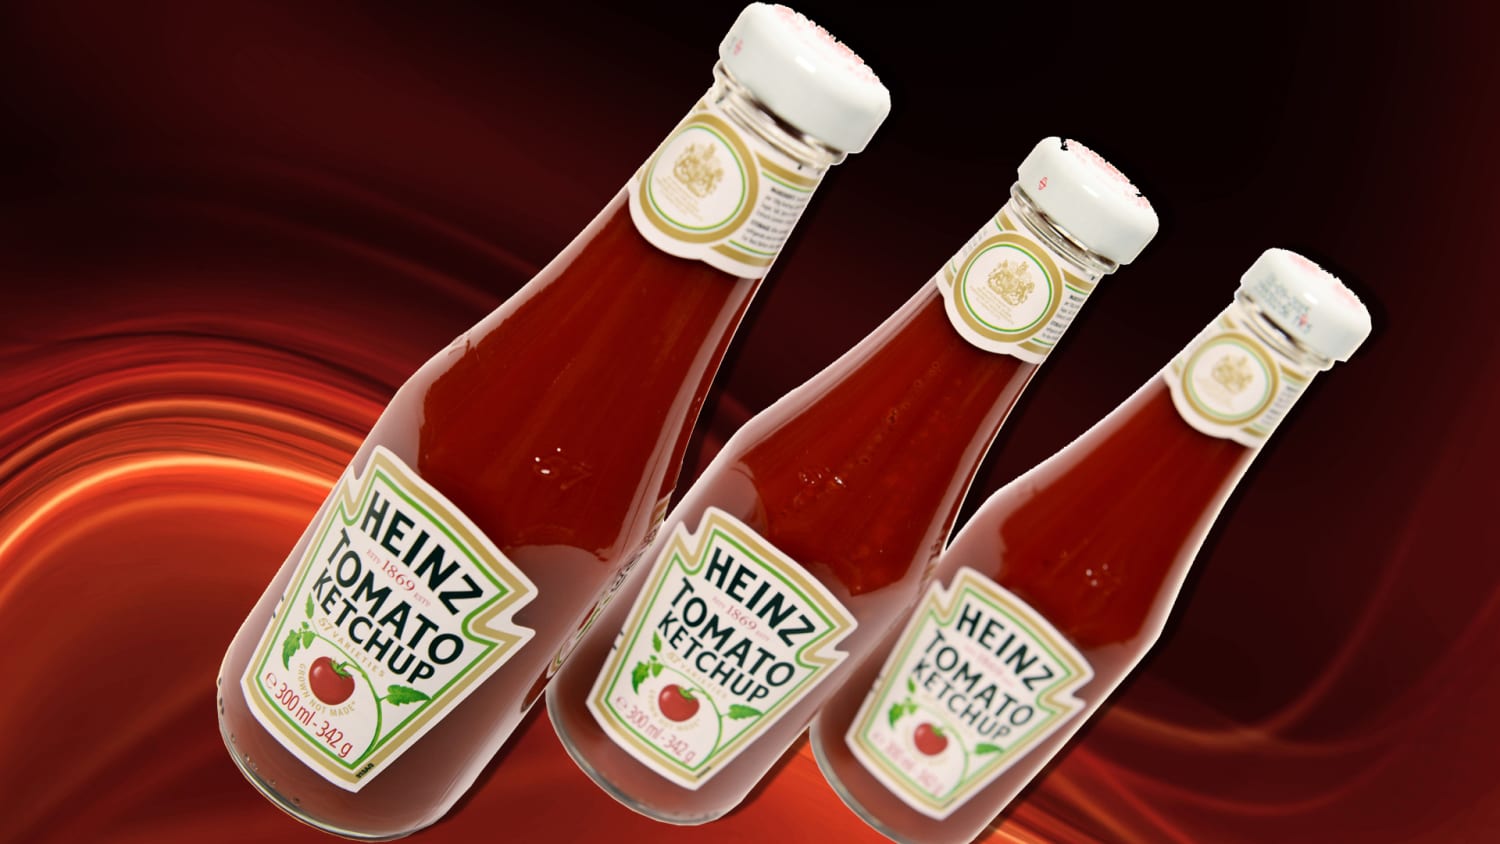 Heinz Ketchup Bottle